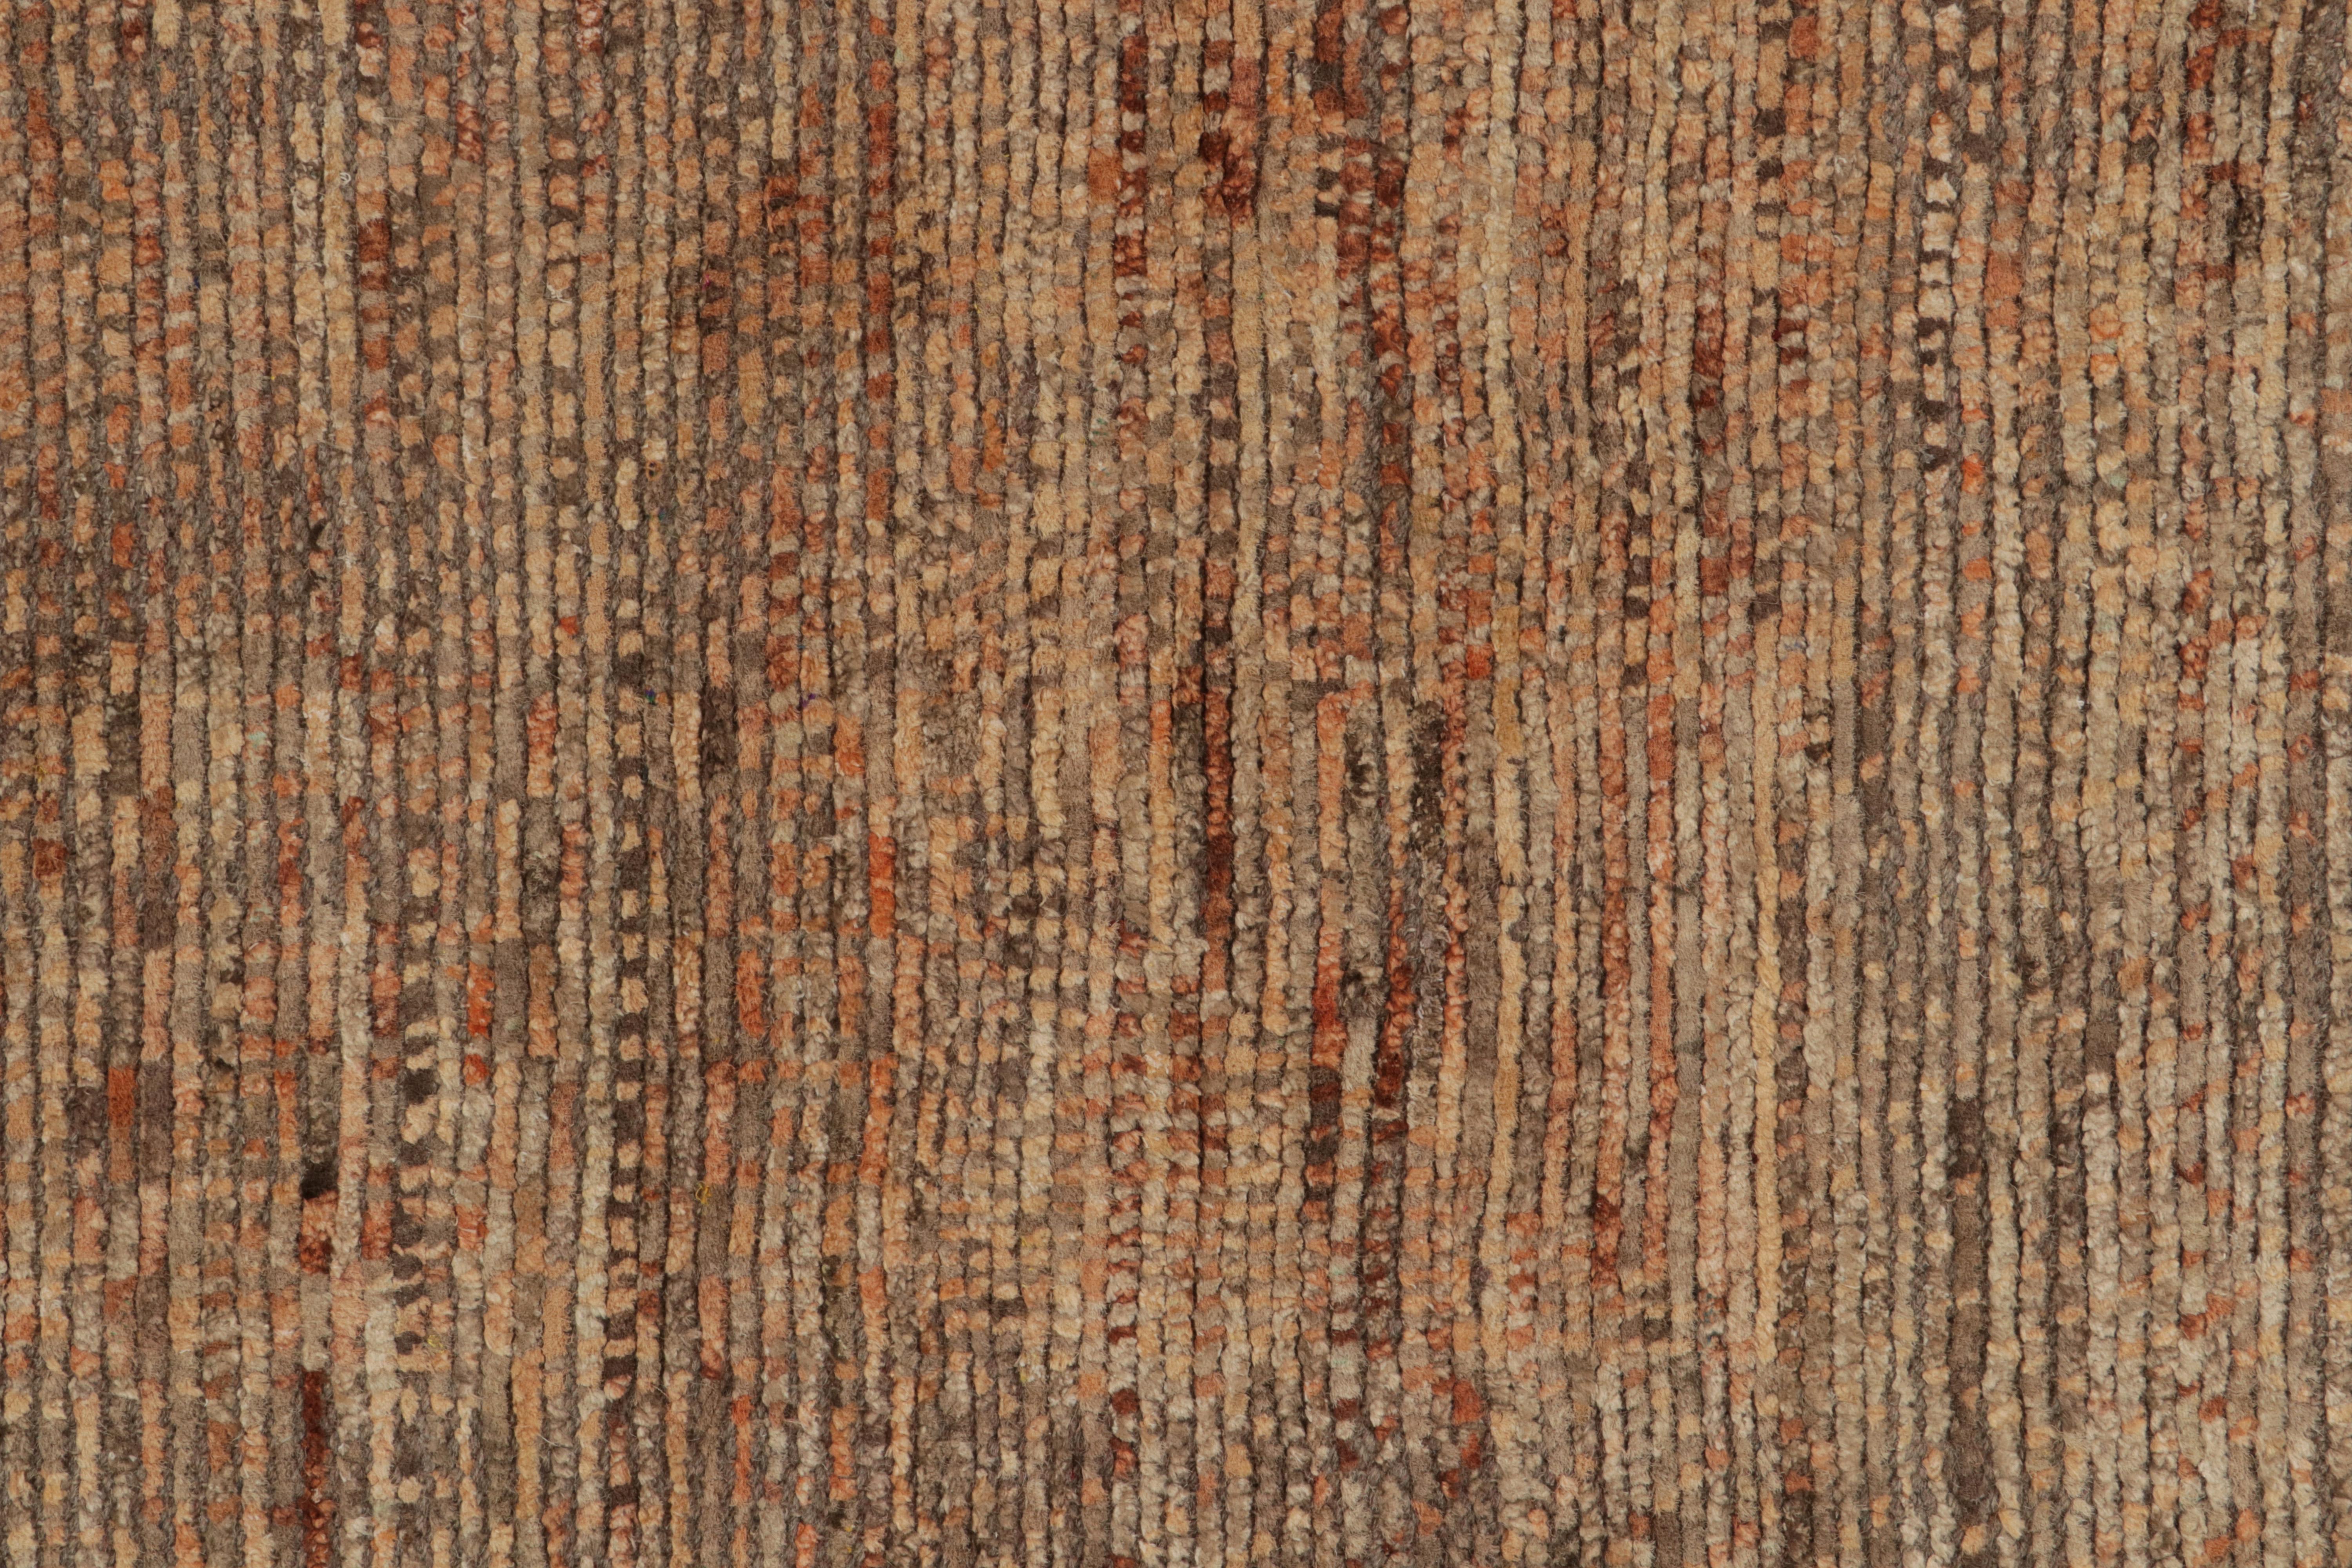 Rug & Kilim’s Modern Textural Rug in Beige-Brown and Orange Striae Patterns For Sale